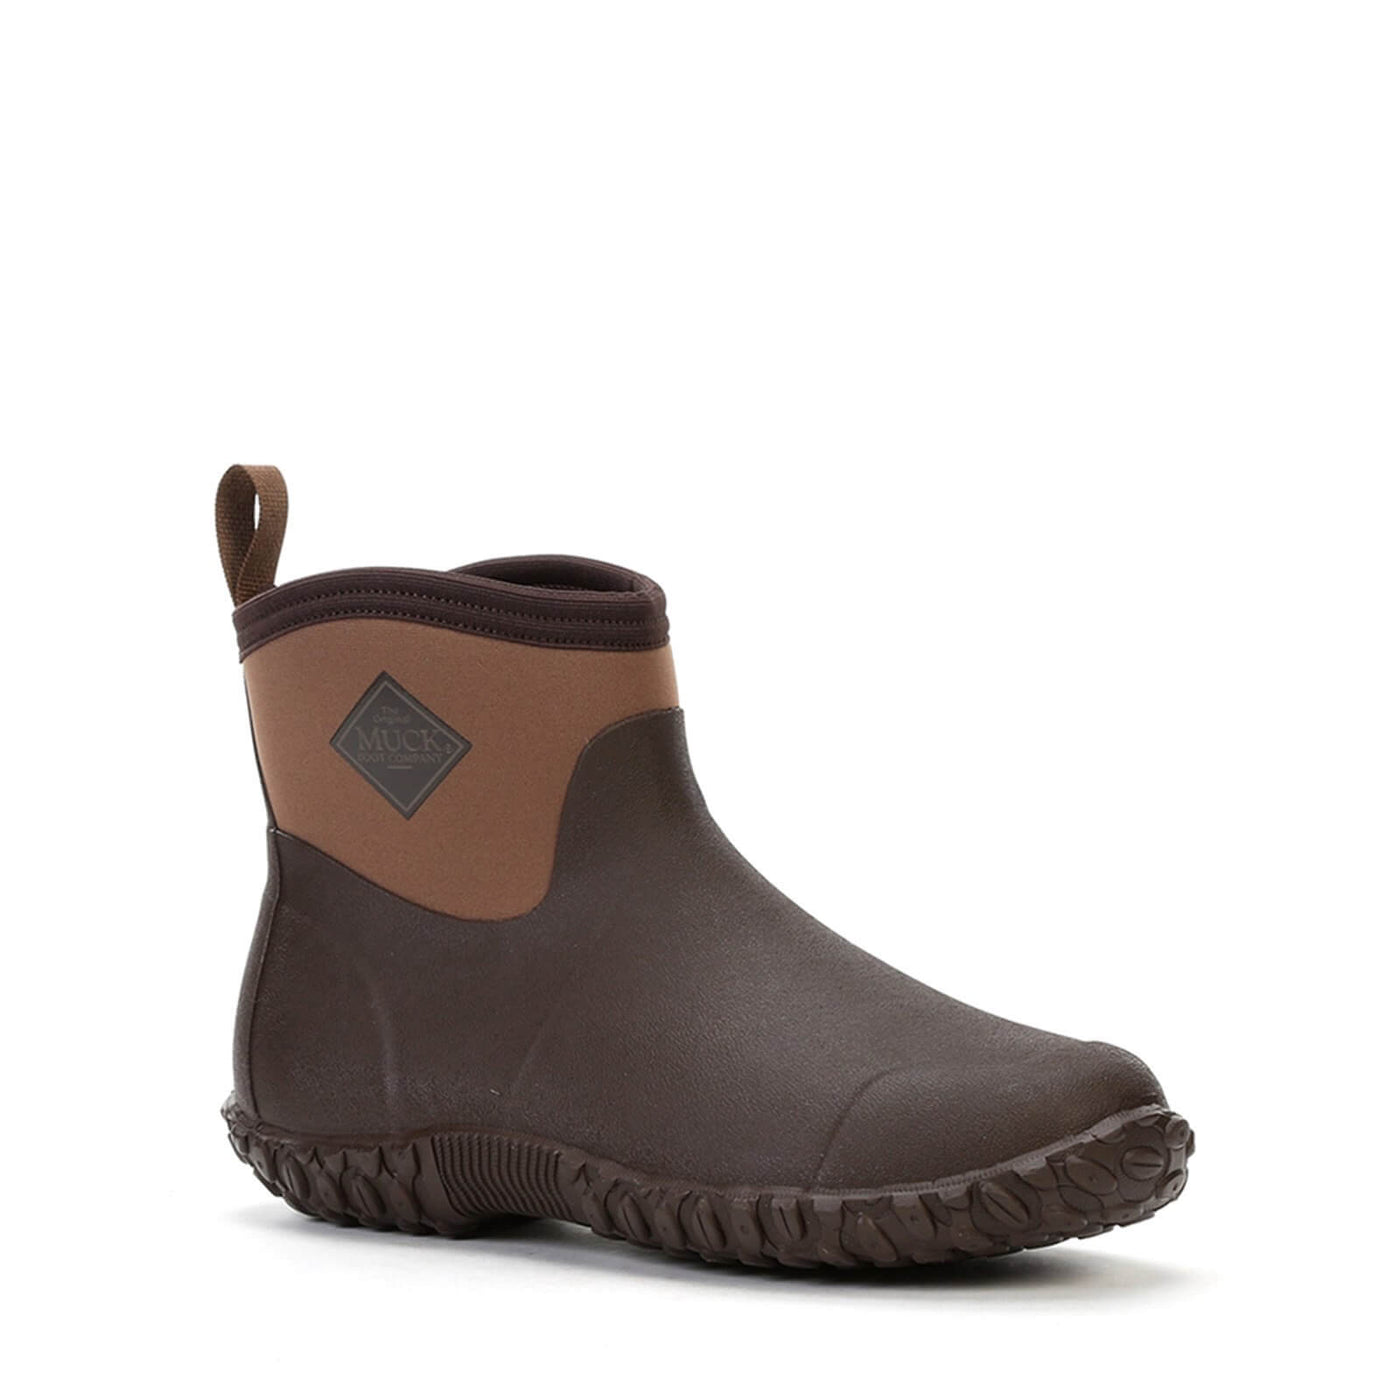 Muck Boots Muckster II Ankle All Purpose Lightweight Shoes Bark/Otter 8#colour_bark-otter